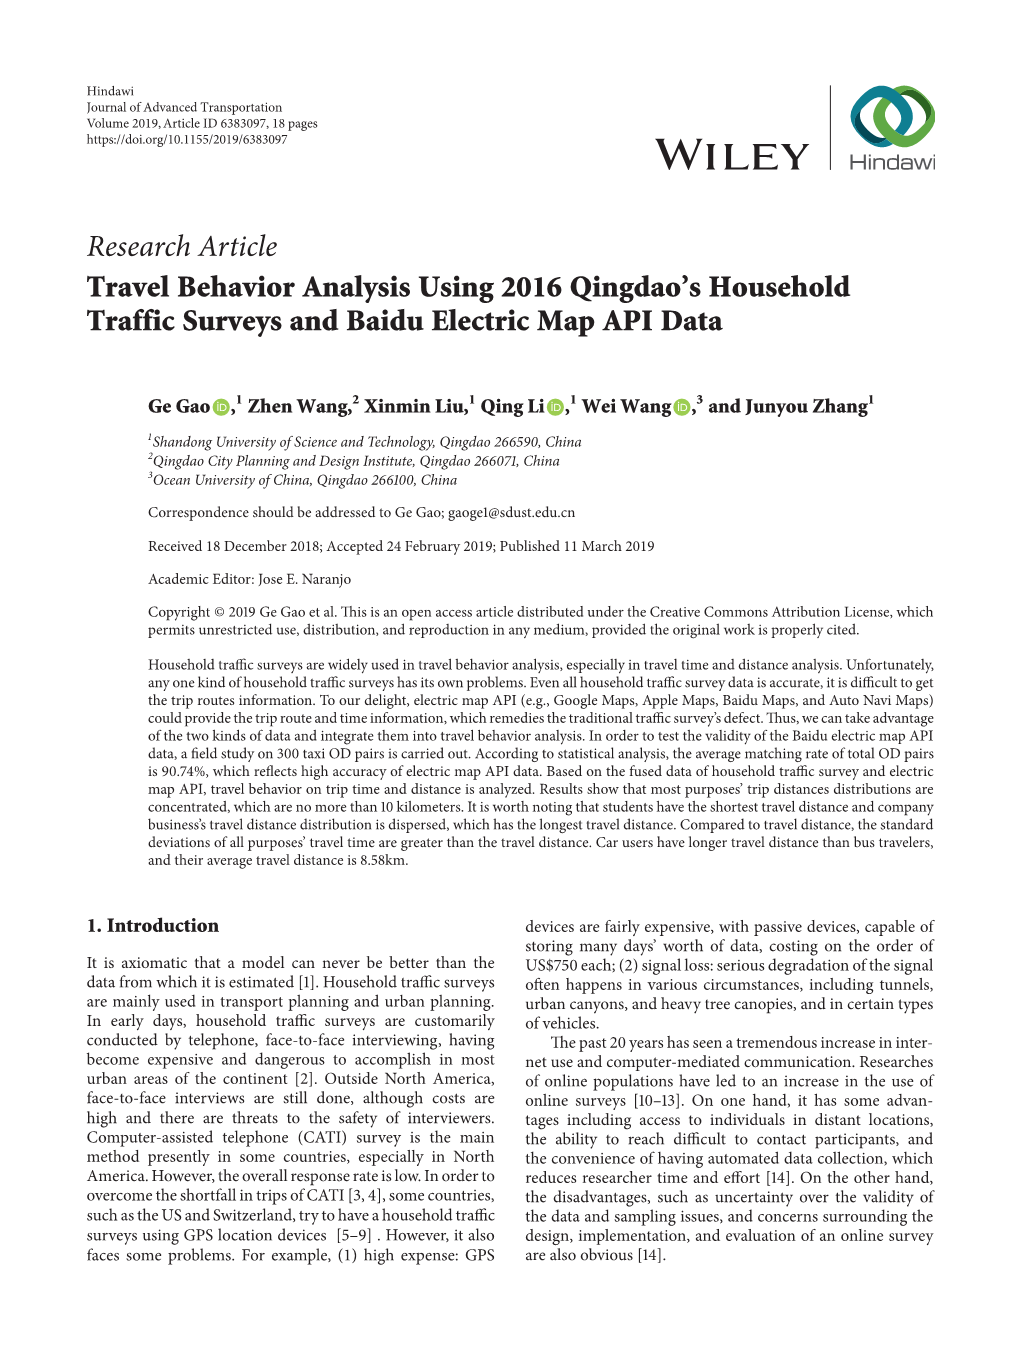 Research Article Travel Behavior Analysis Using 2016 Qingdao's